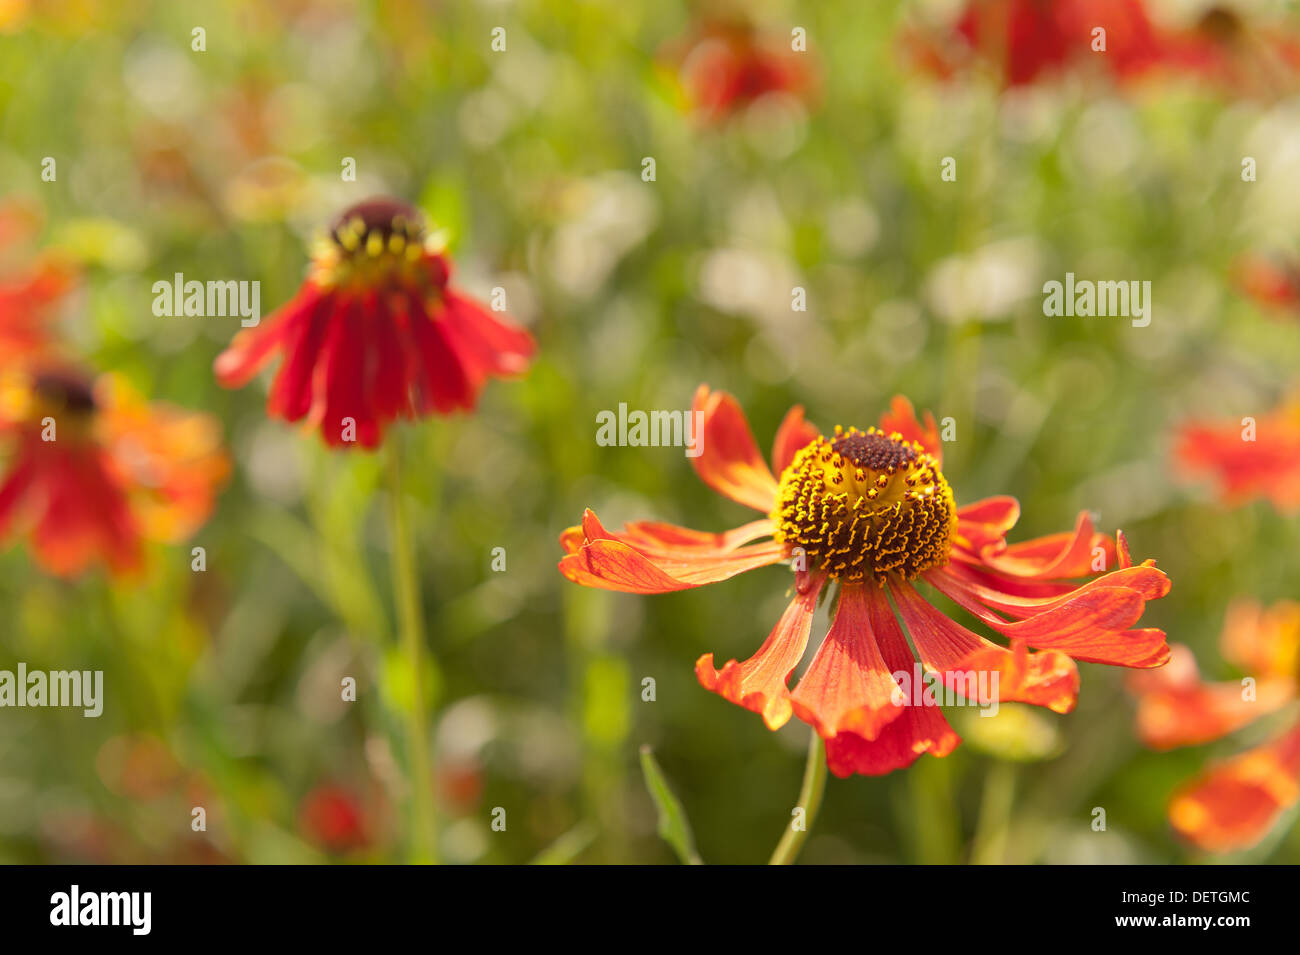 Brilliant shades of red Helenium moerheim beauty or sneezeweed flower Stock Photo